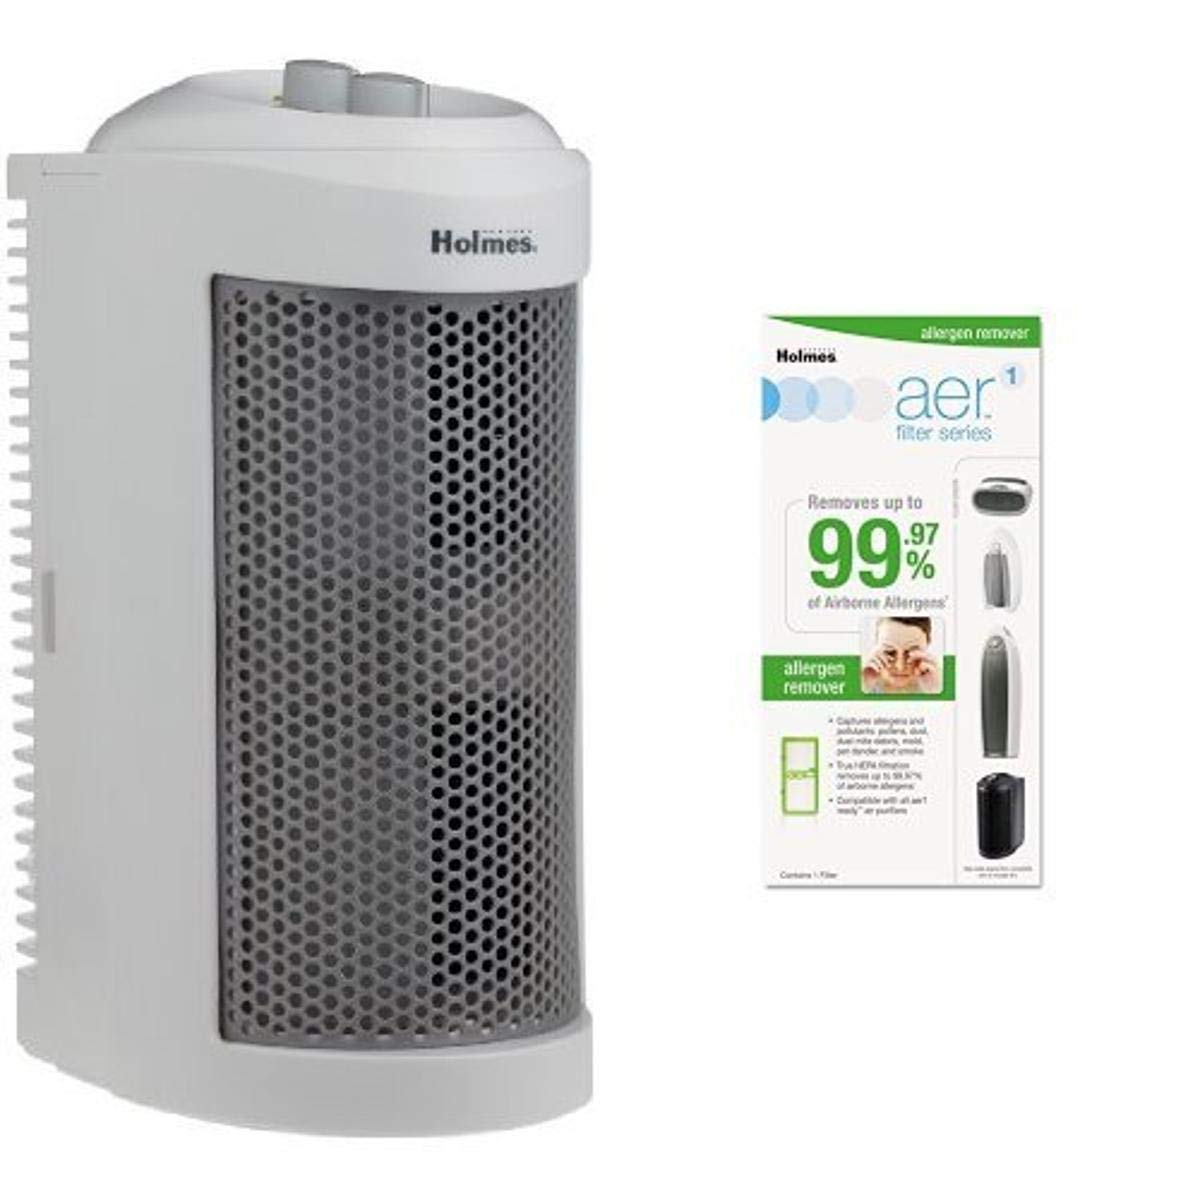 Holmes True HEPA Allergen Remover Mini Tower Air Purifier with Allergen Remover Filter